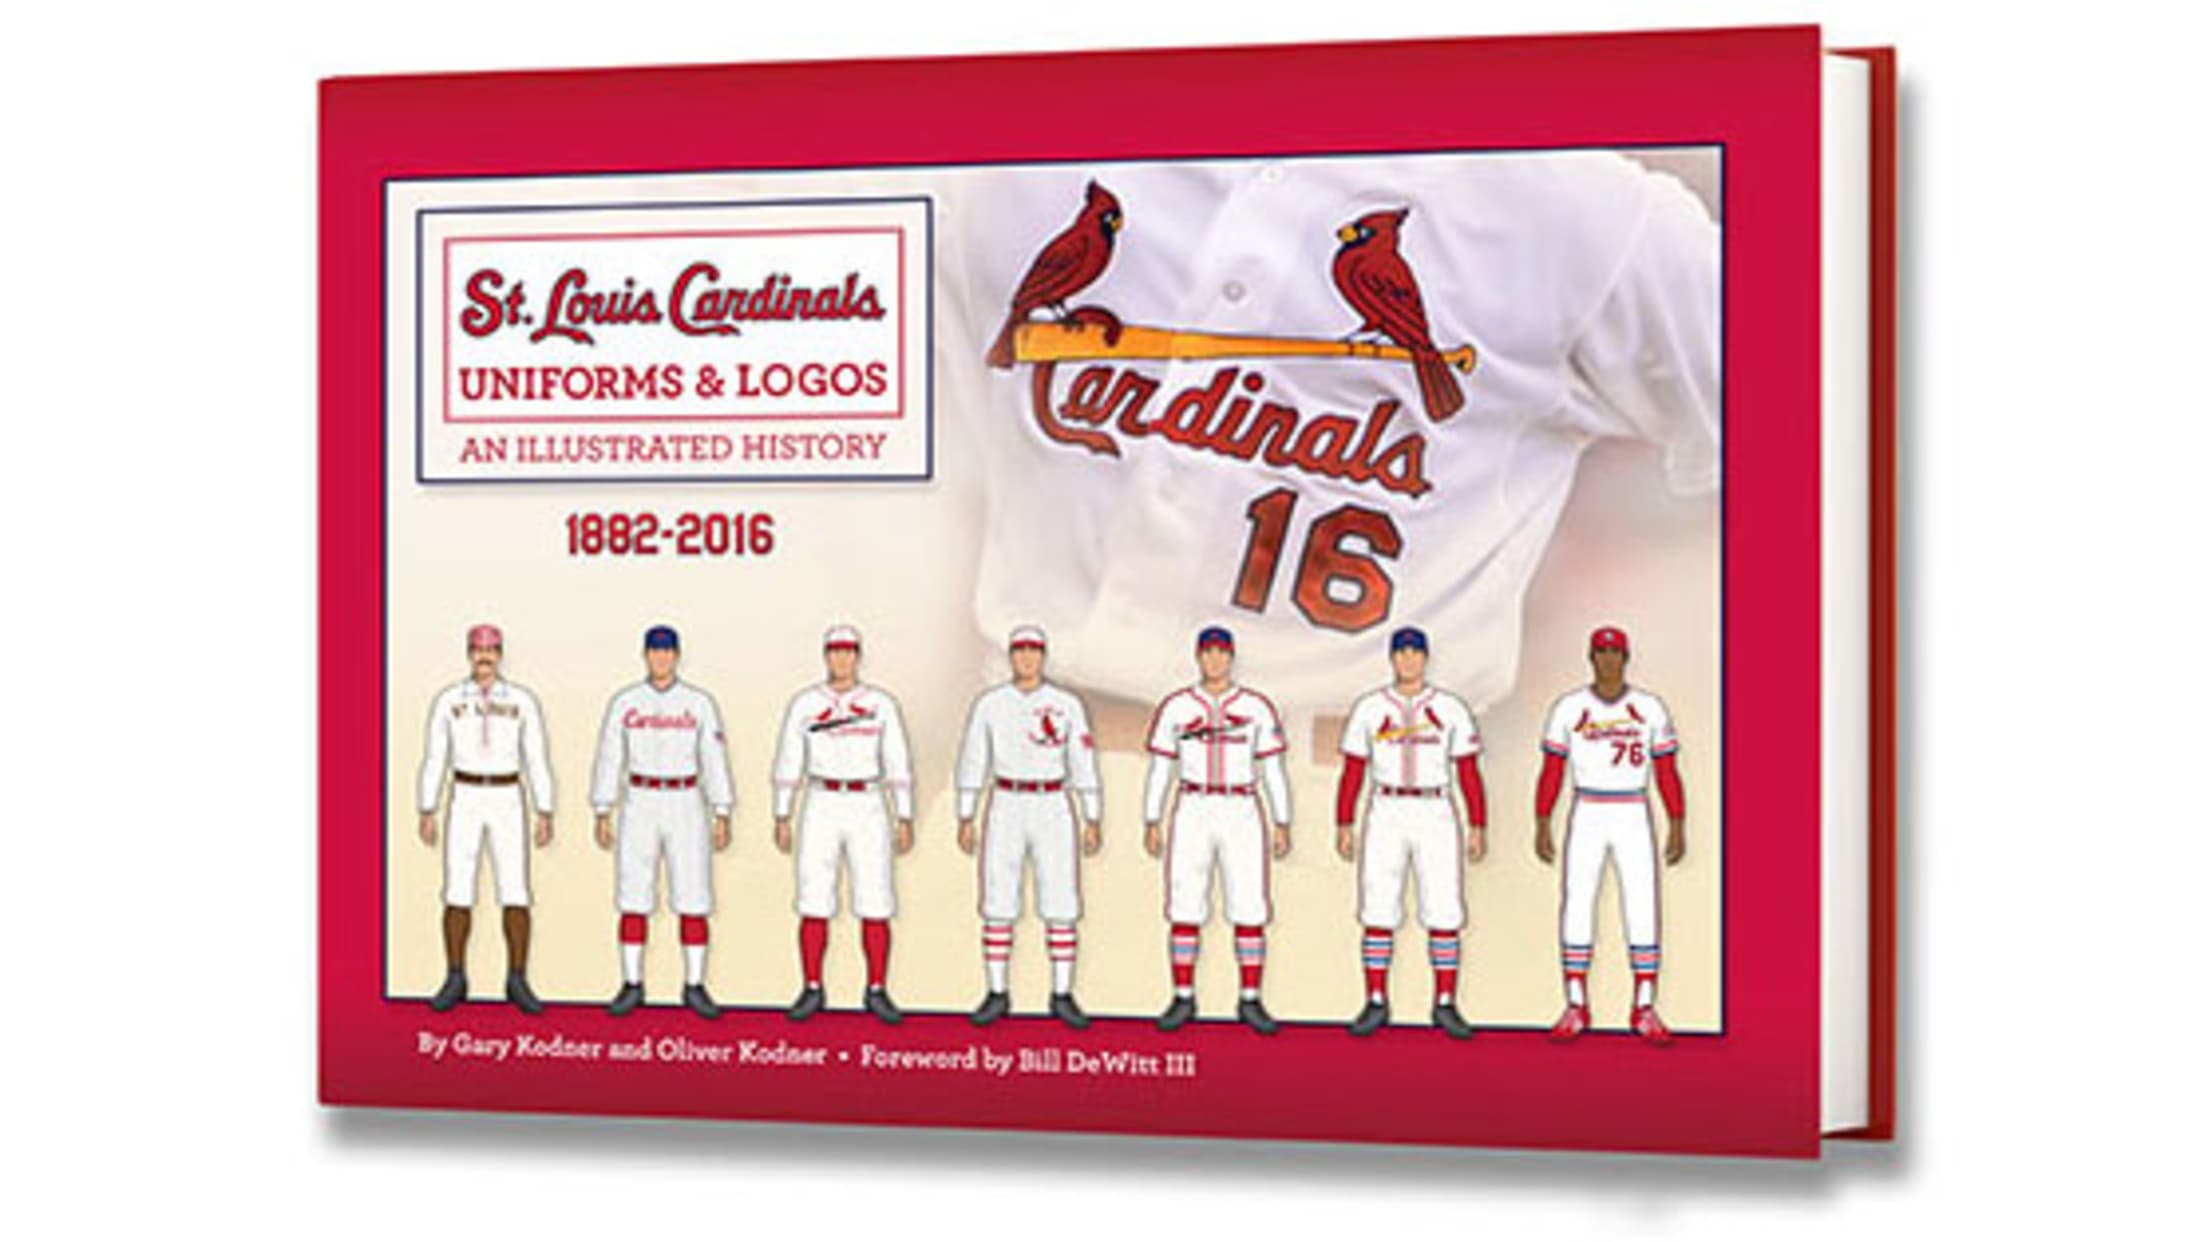 cardinals uniform